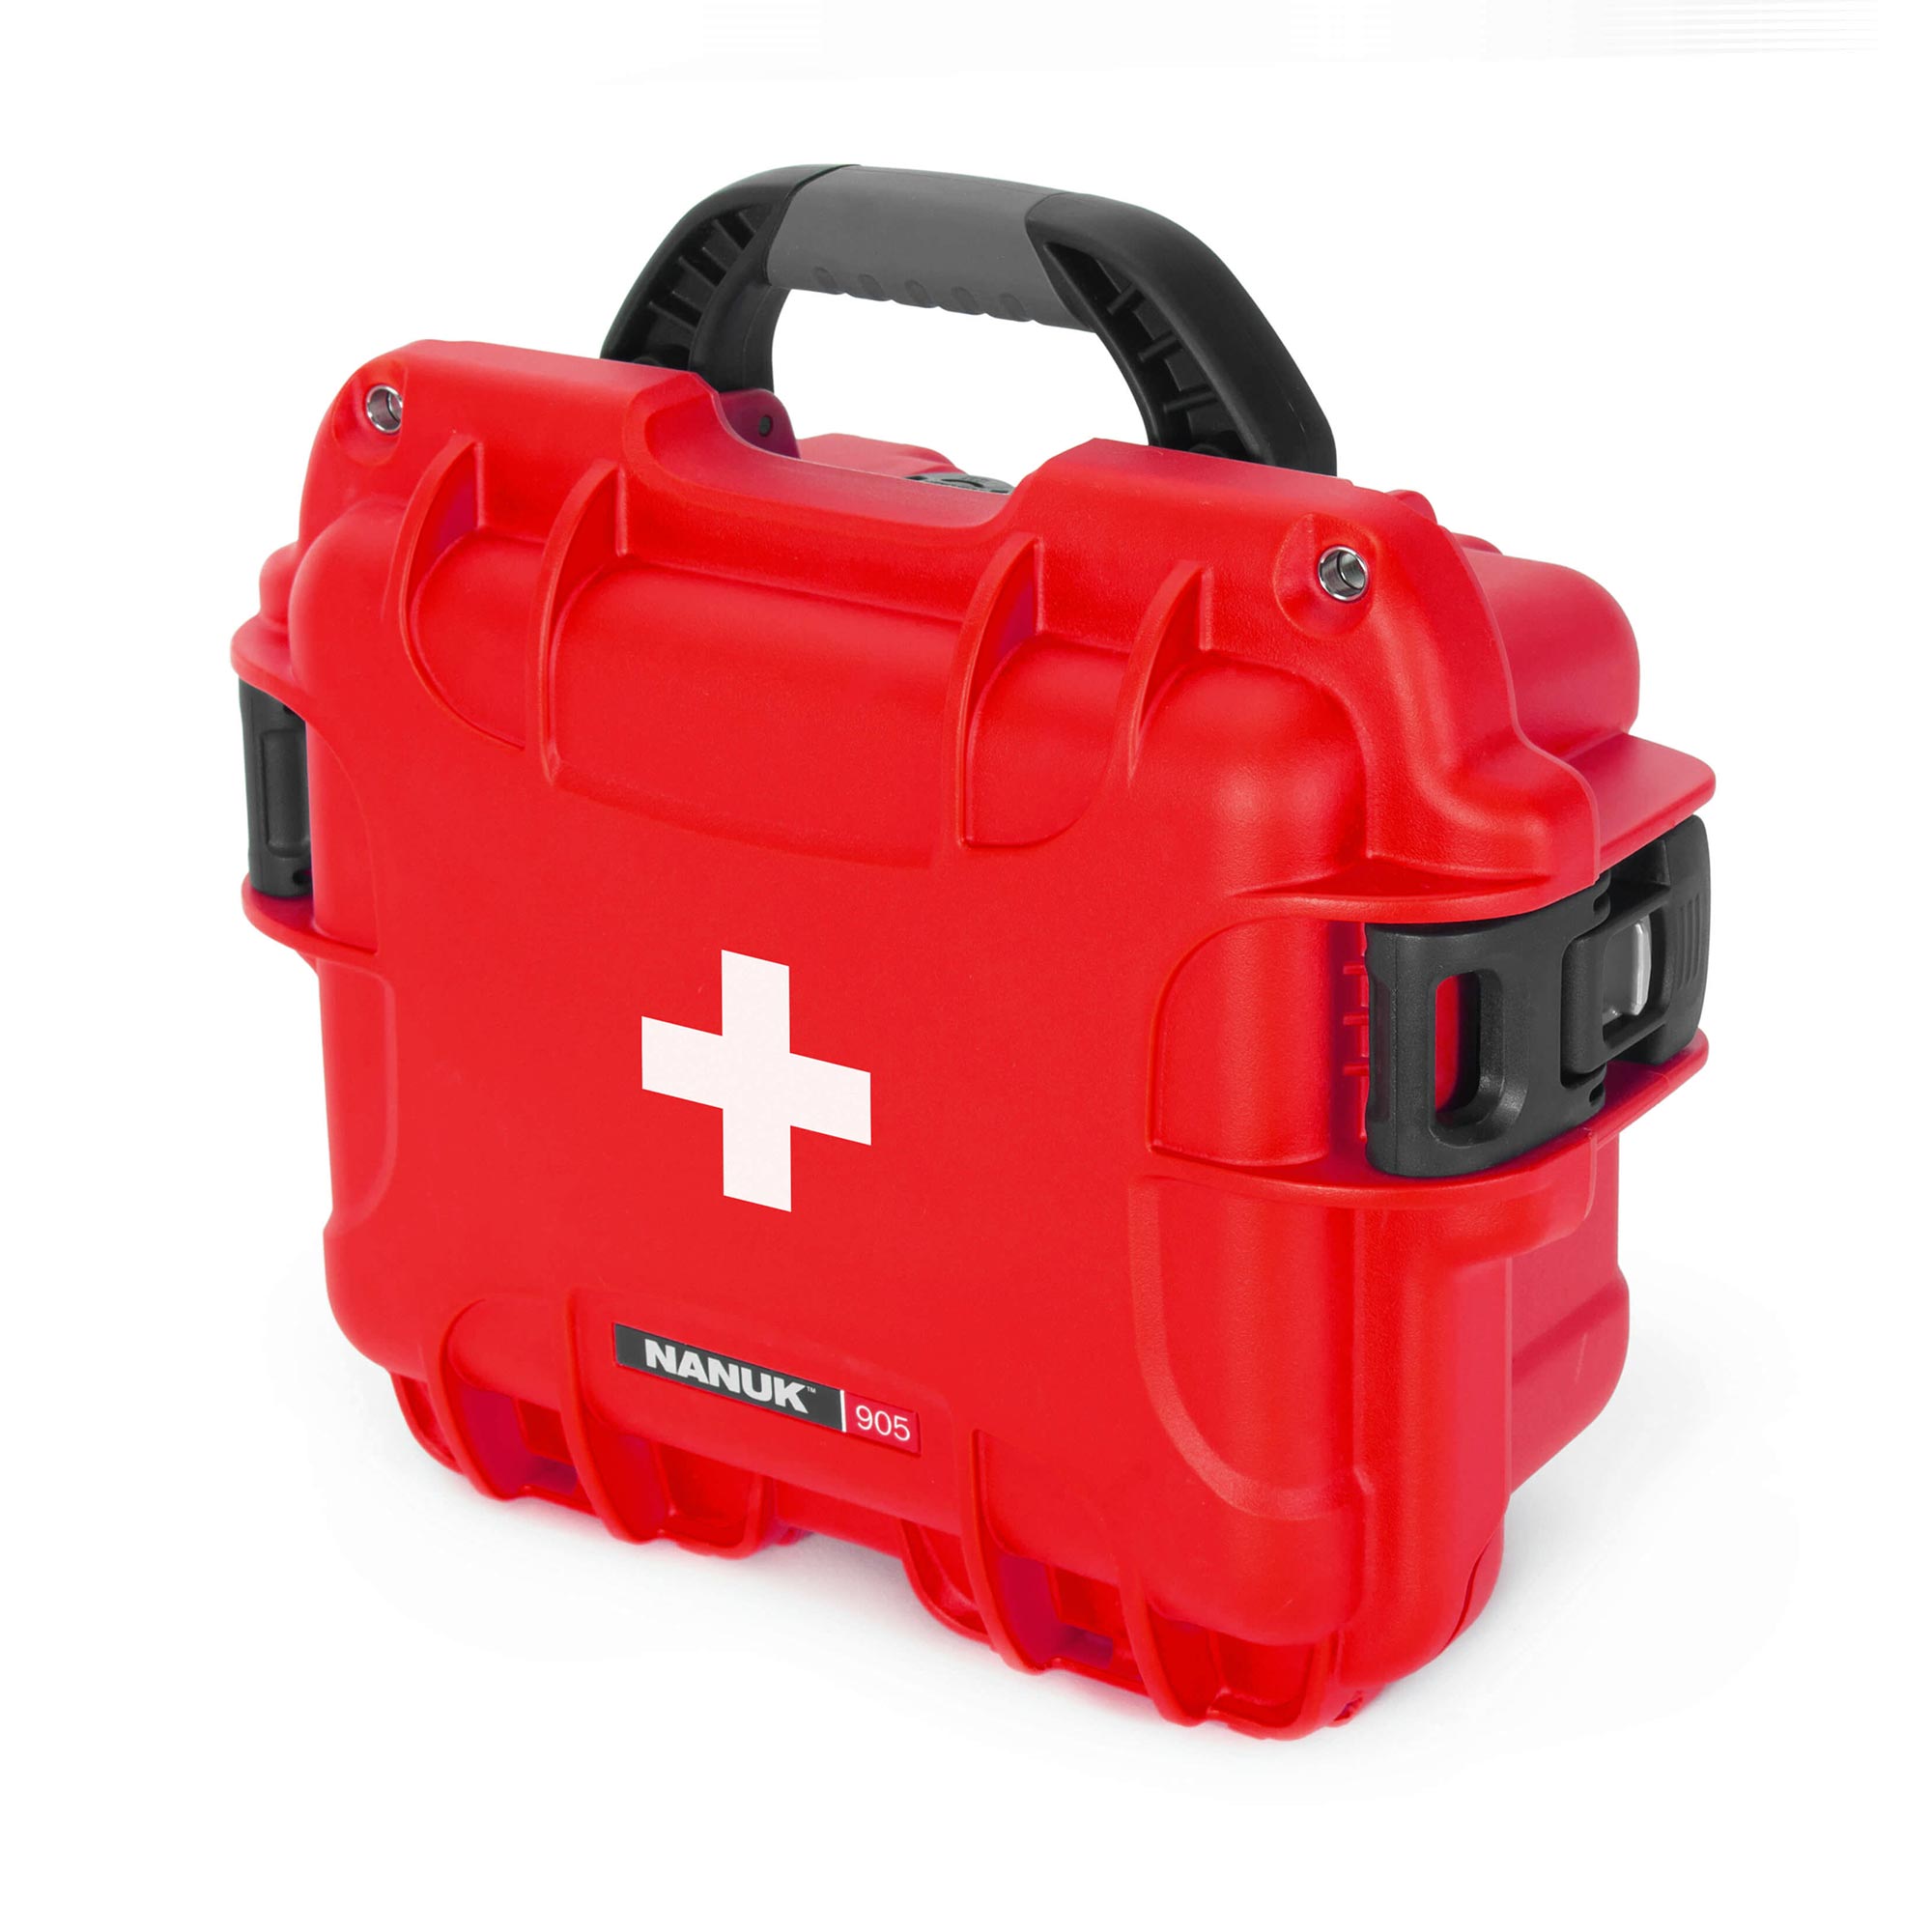 NANUK 905 First Aid case  Official NANUK Protective Case Online